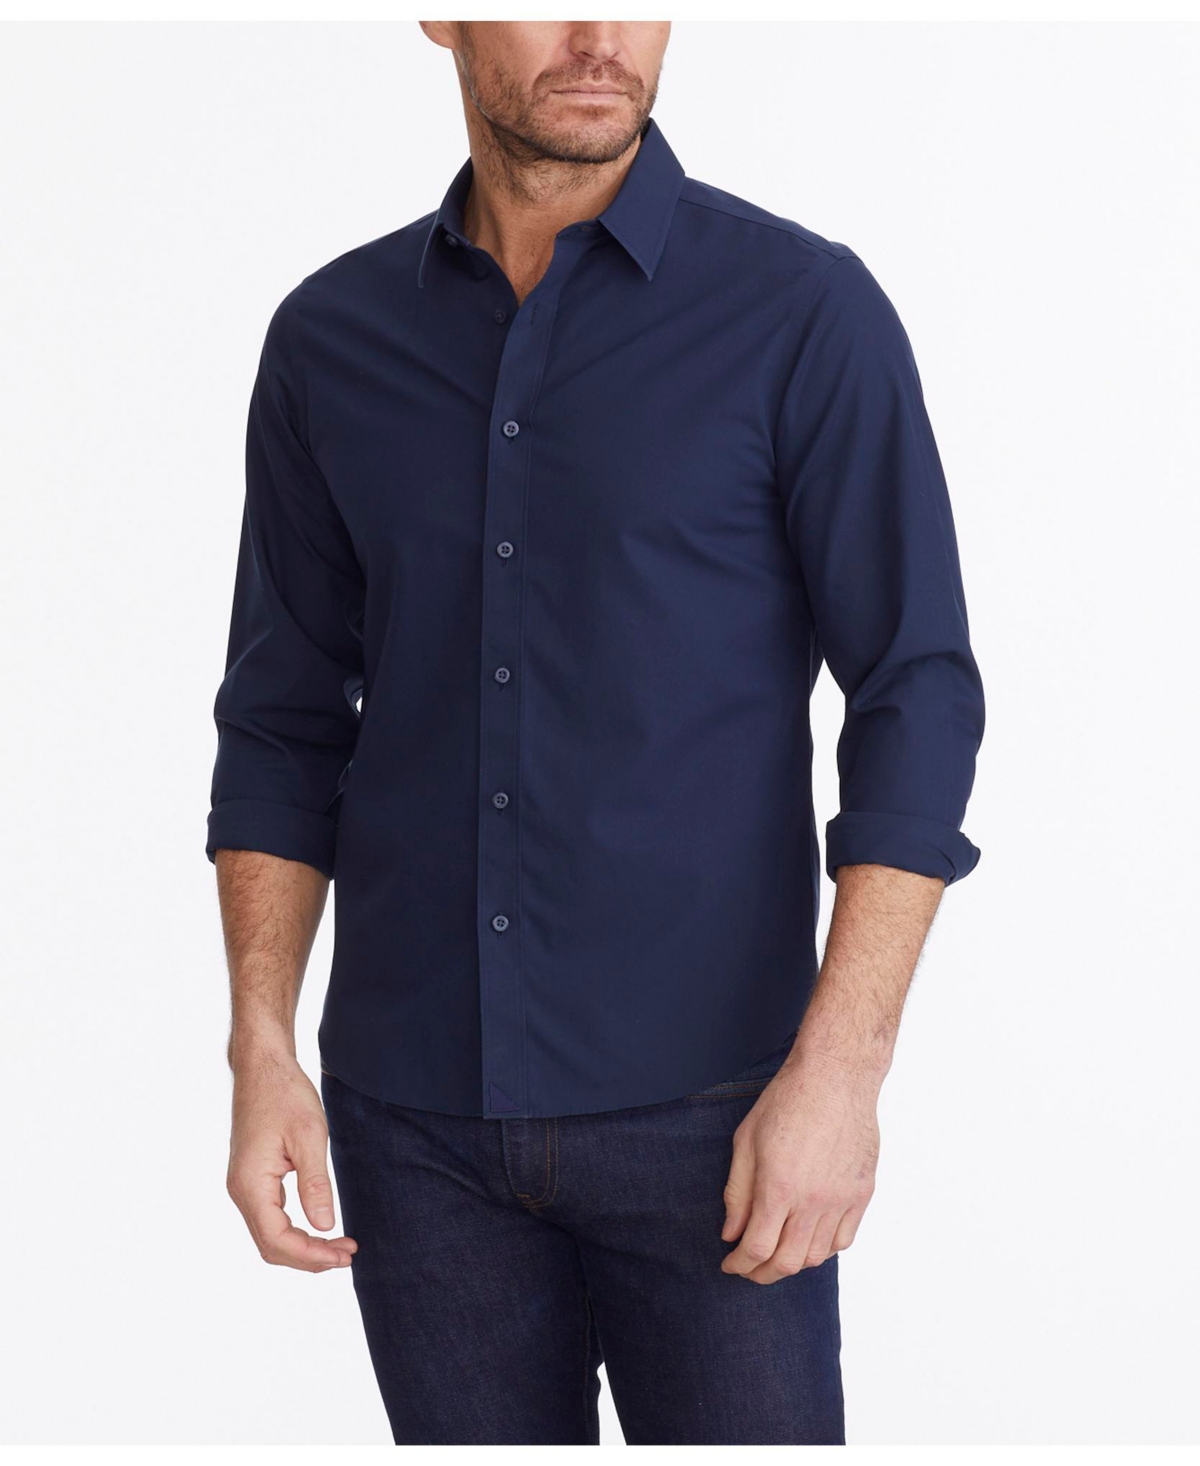 Men's Slim Fit Wrinkle-Free Castello Button Up Shirt - Navy